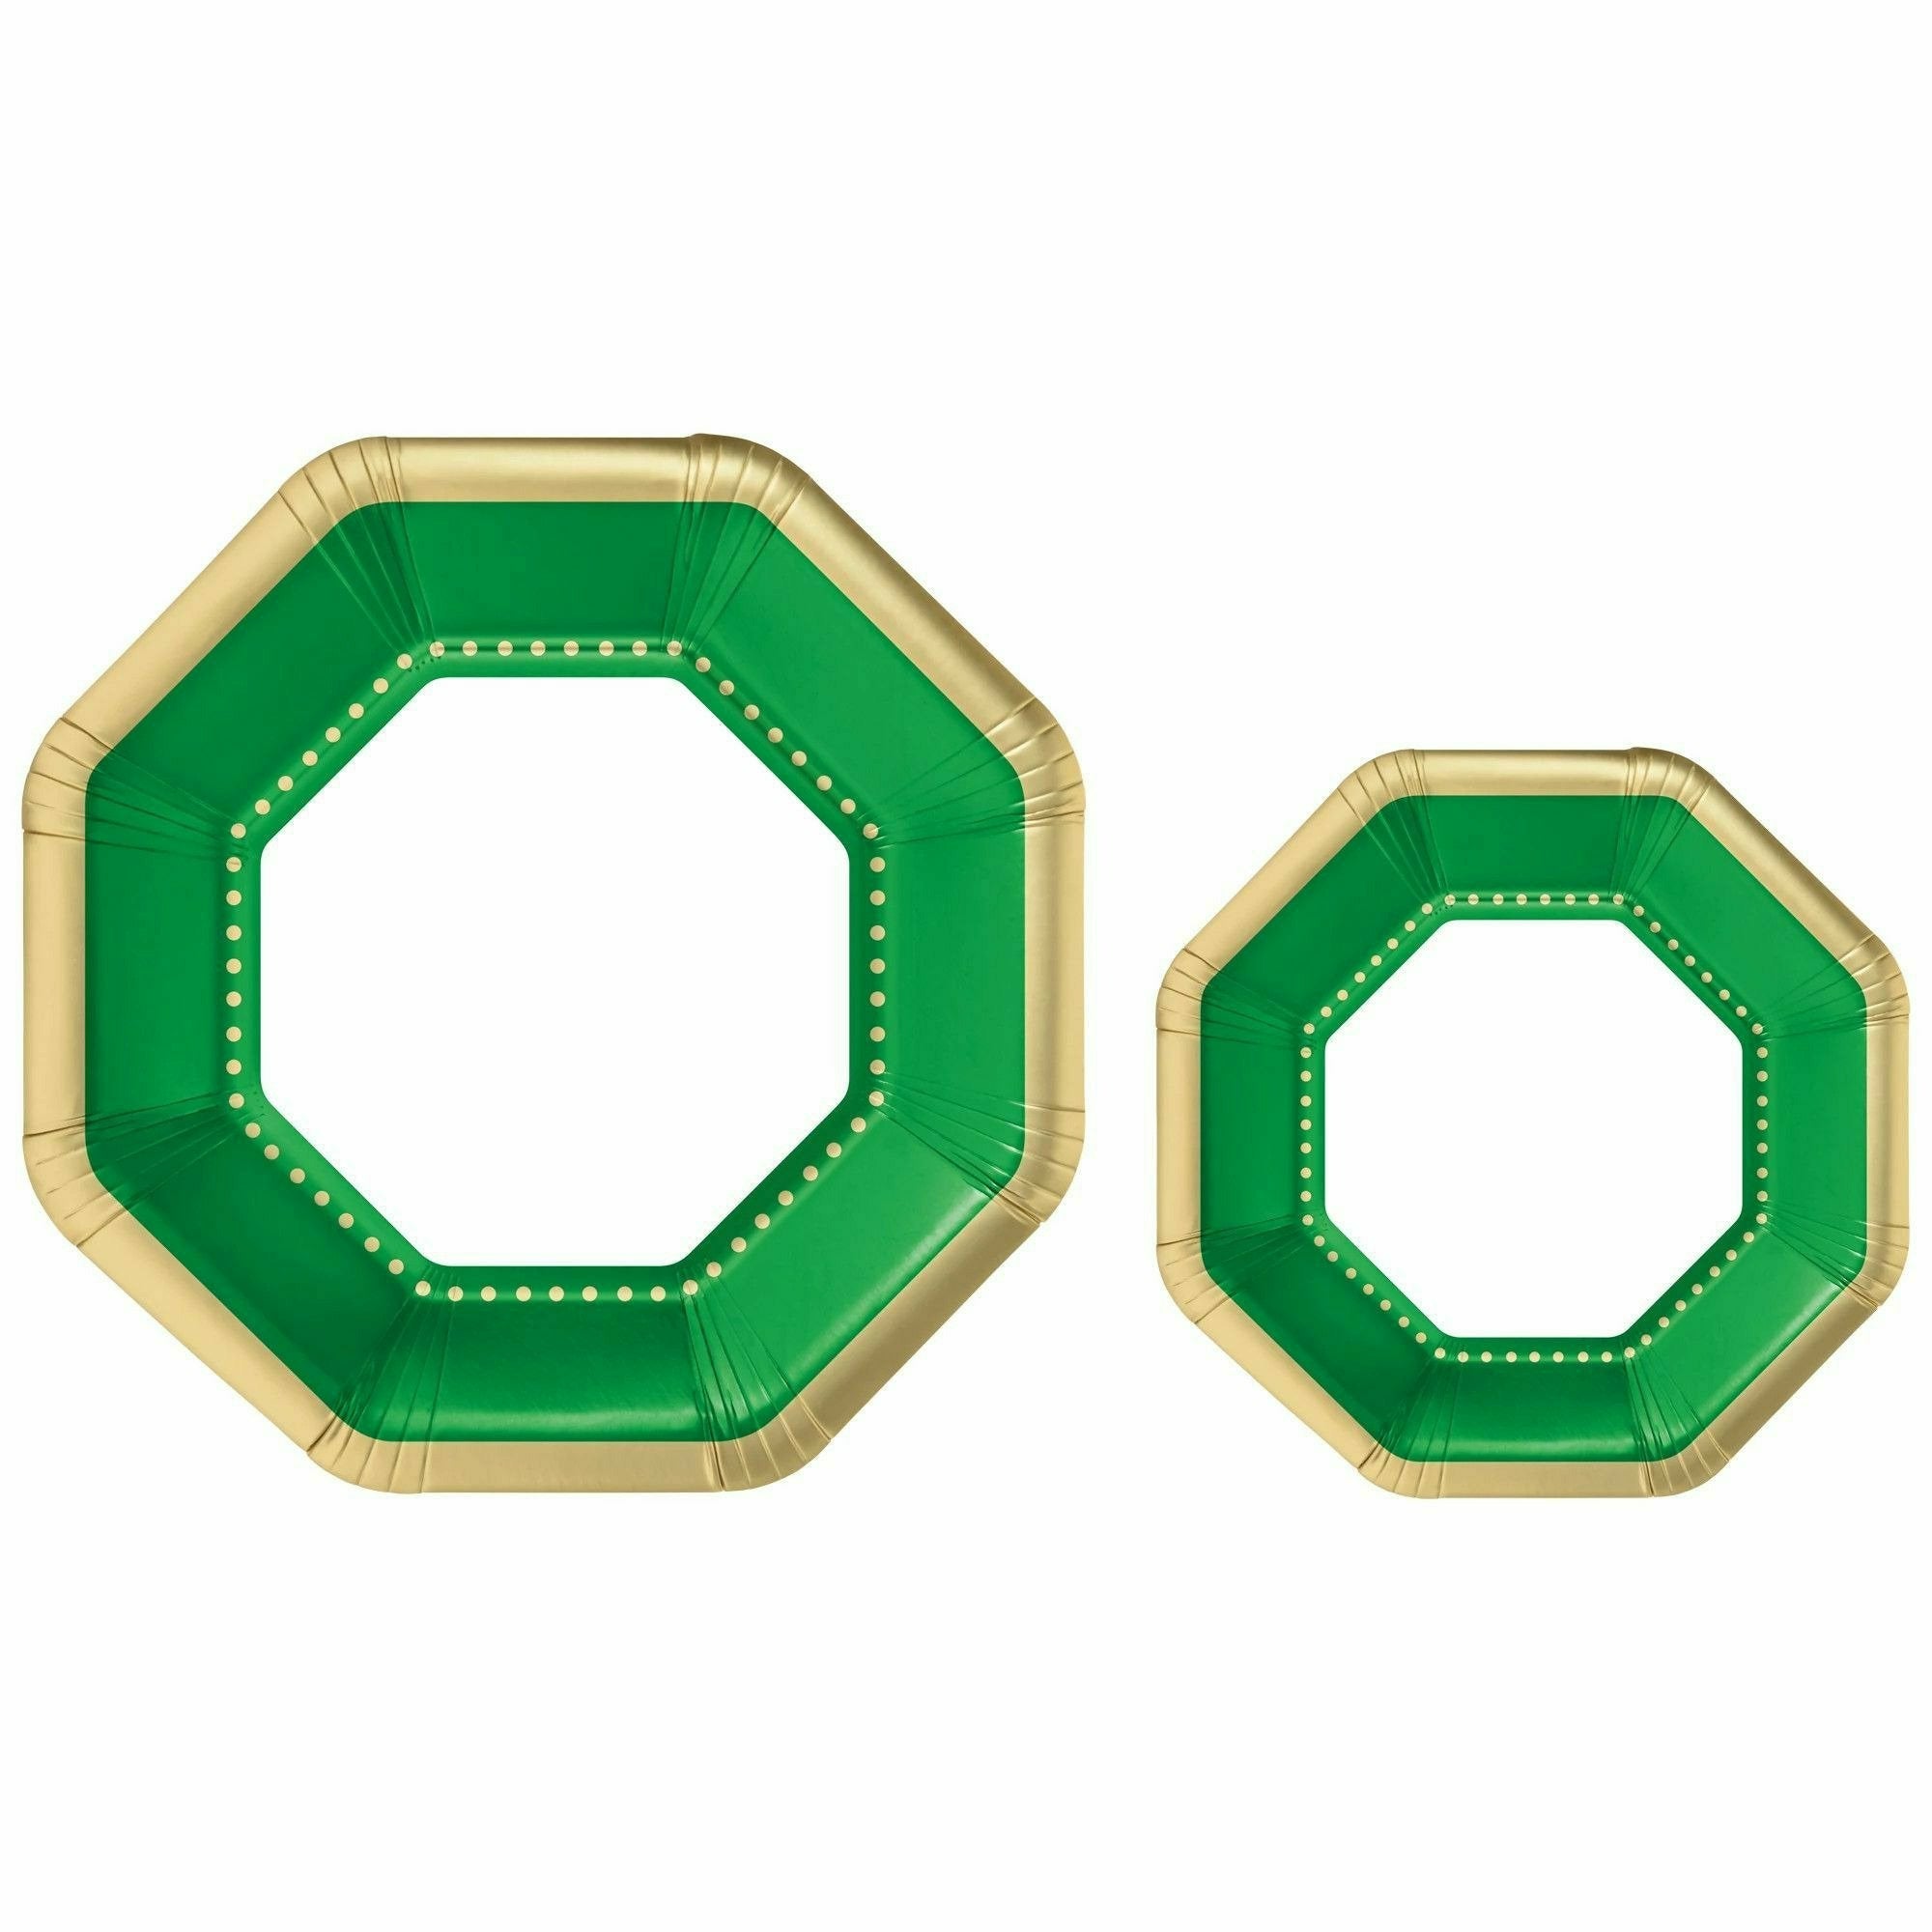 Amscan BASIC Festive Green - Multipack, Premium Paper Plates